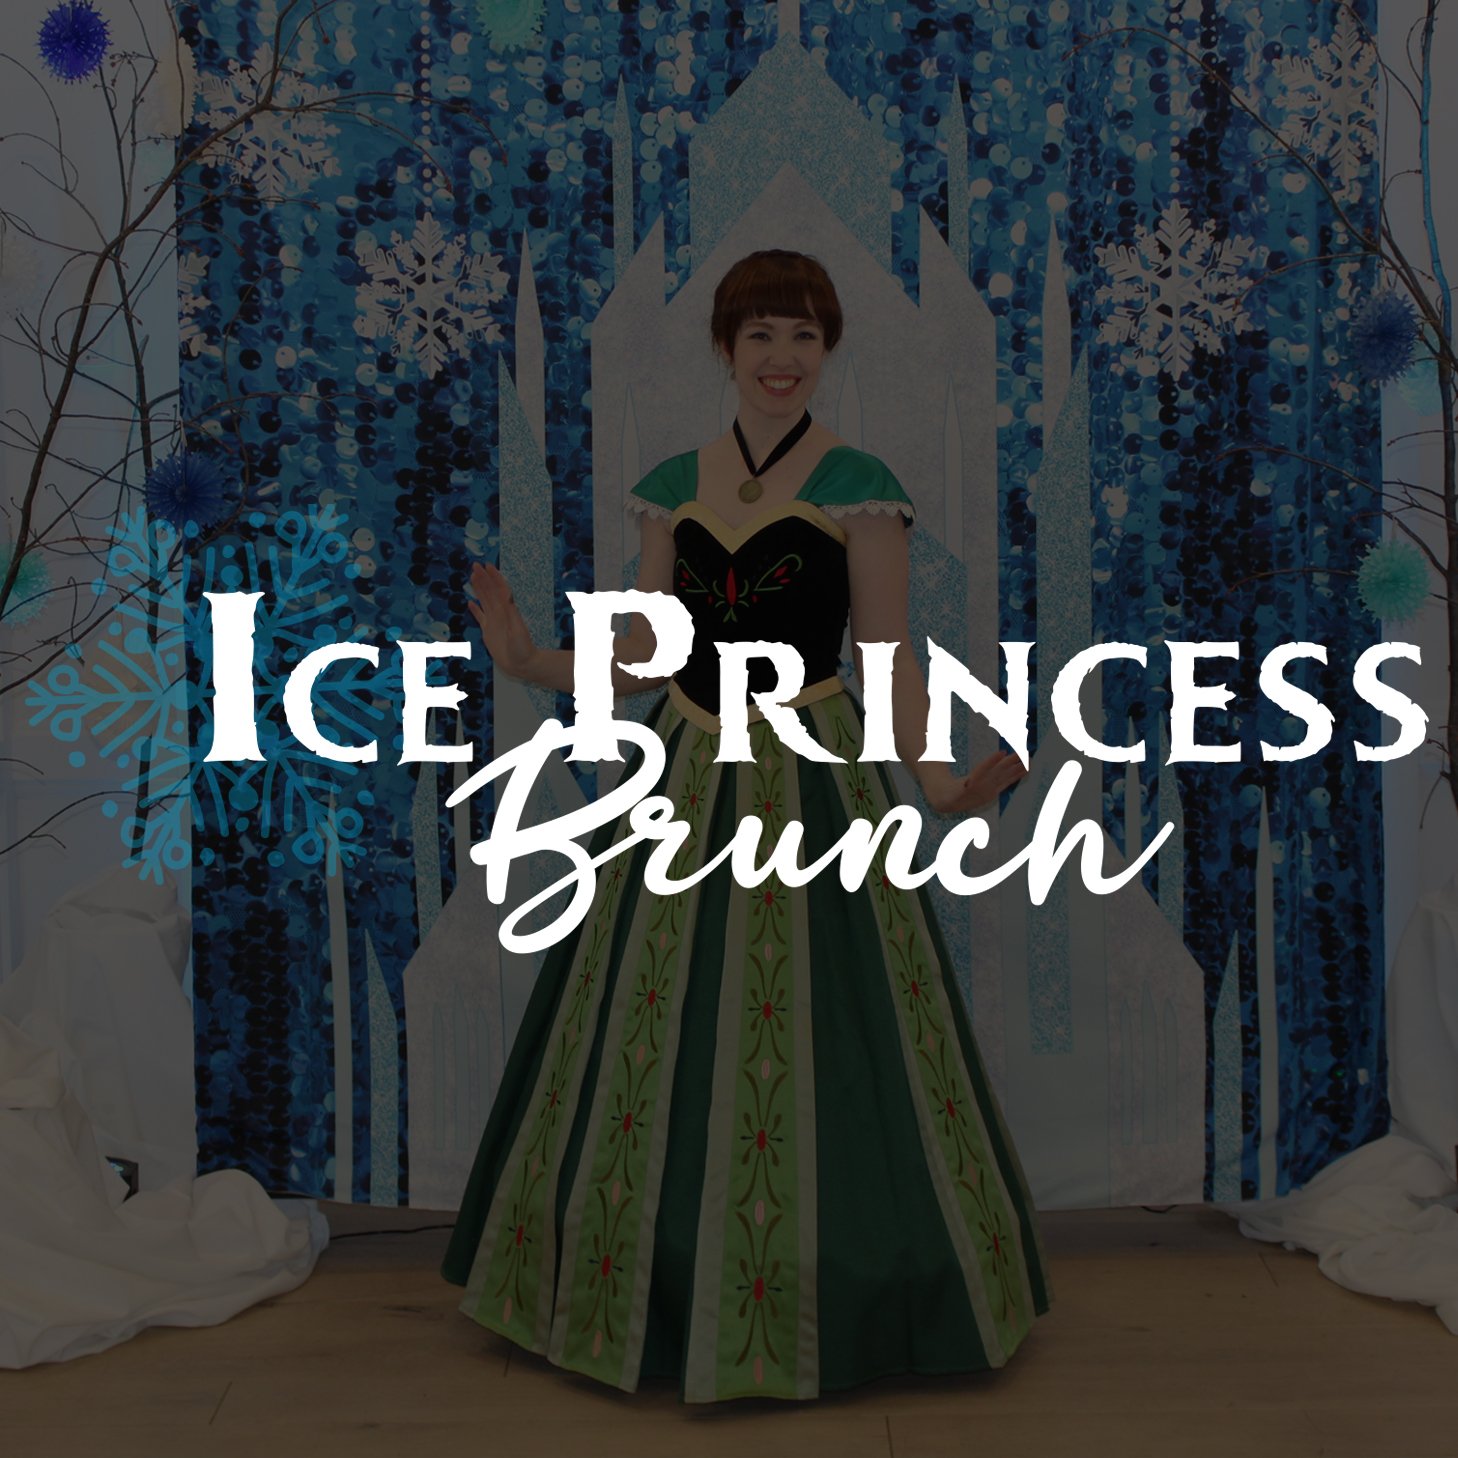 Ice Princess Brunch.jpg